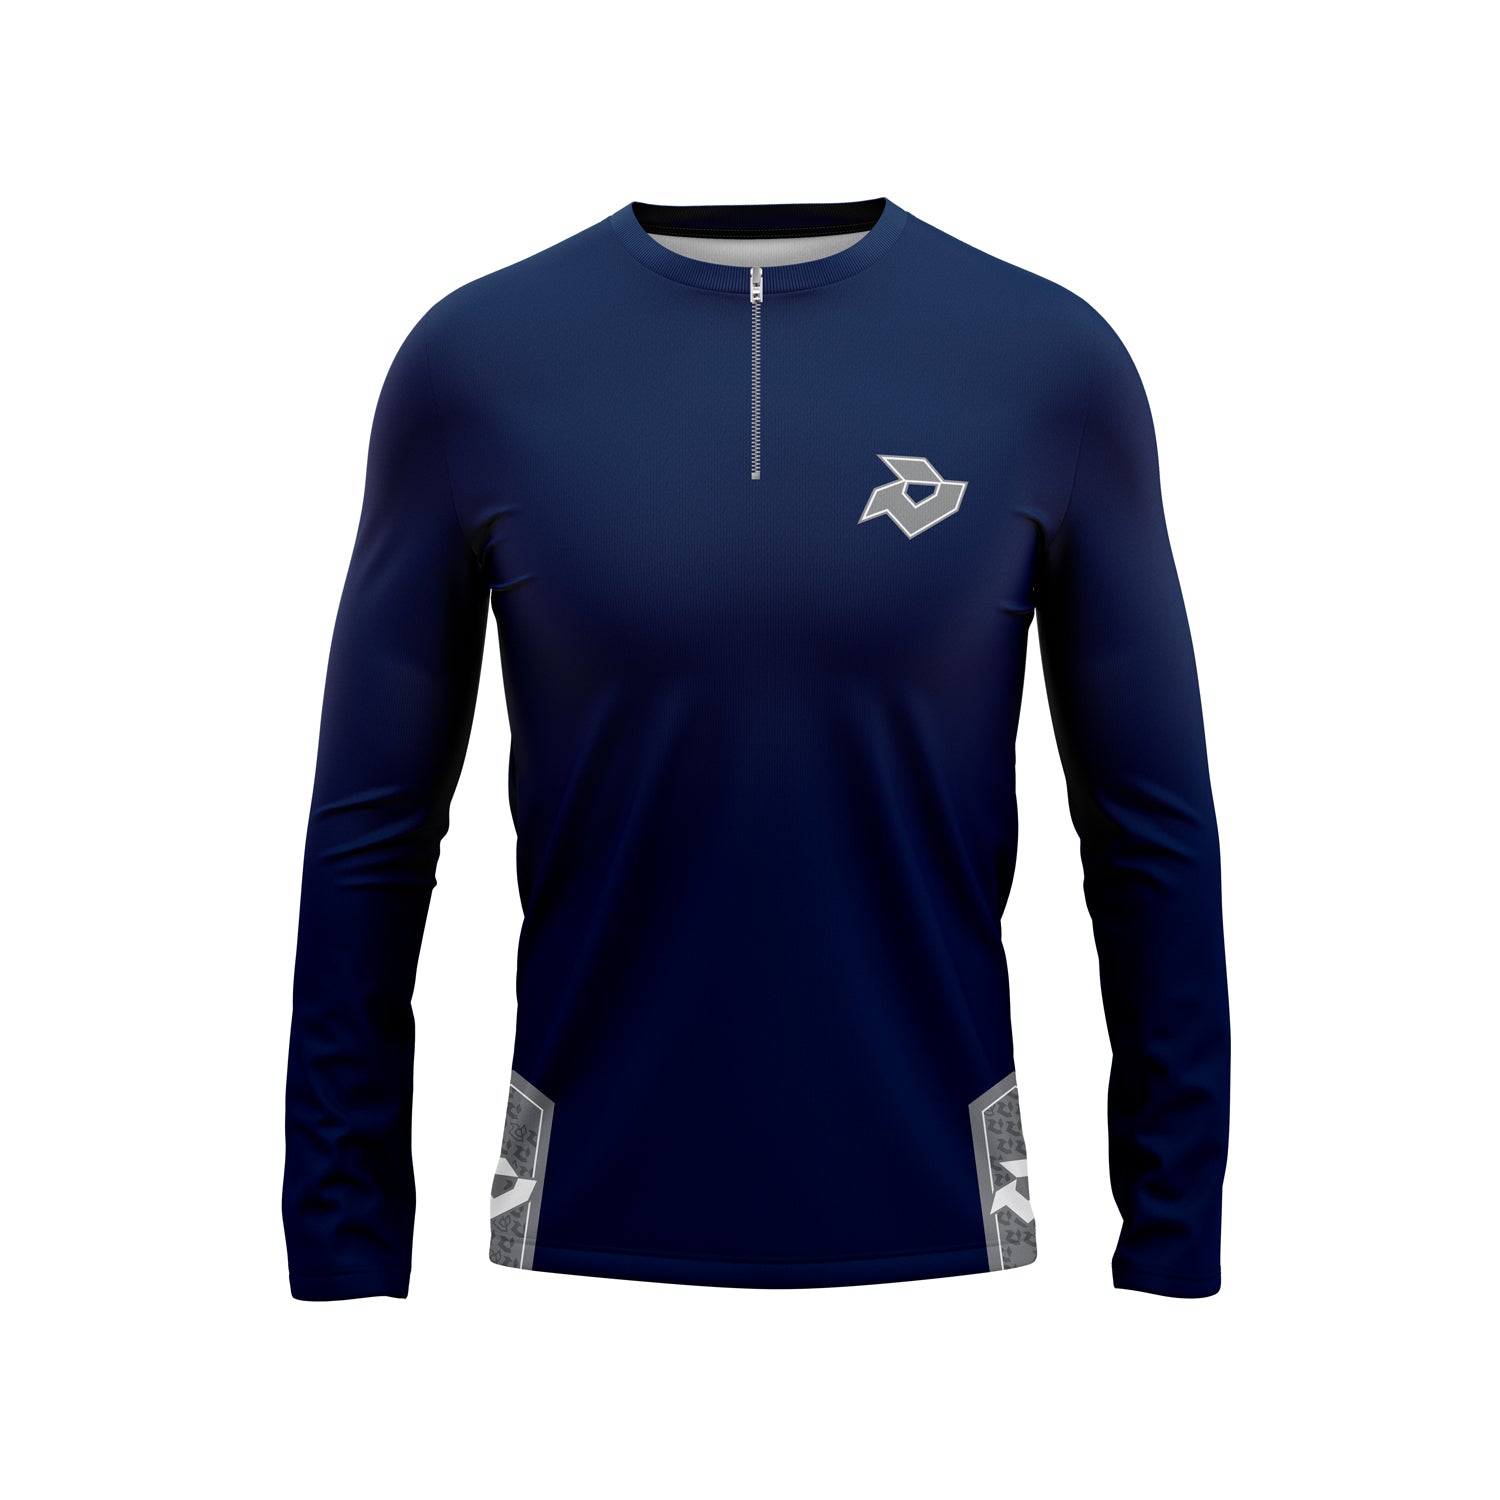 DeMarini Long Sleeve Cage Jacket - Navy Blue – Red Athlete